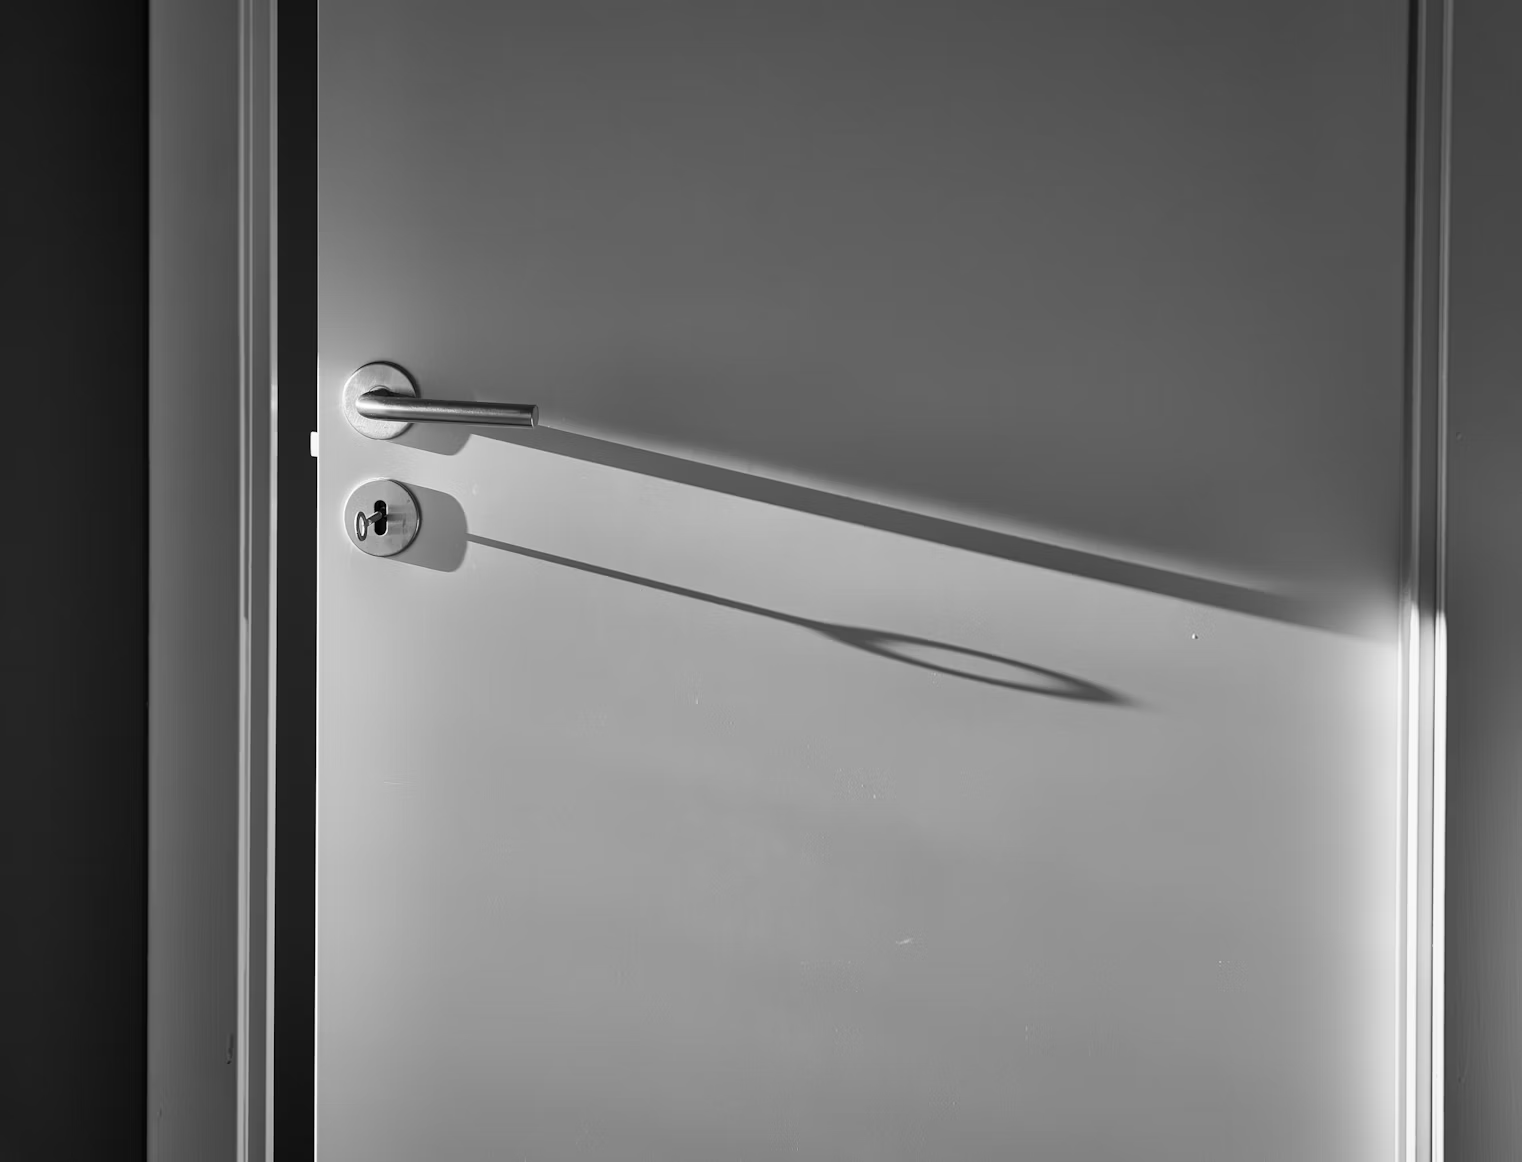 A commercial steel door with a handle